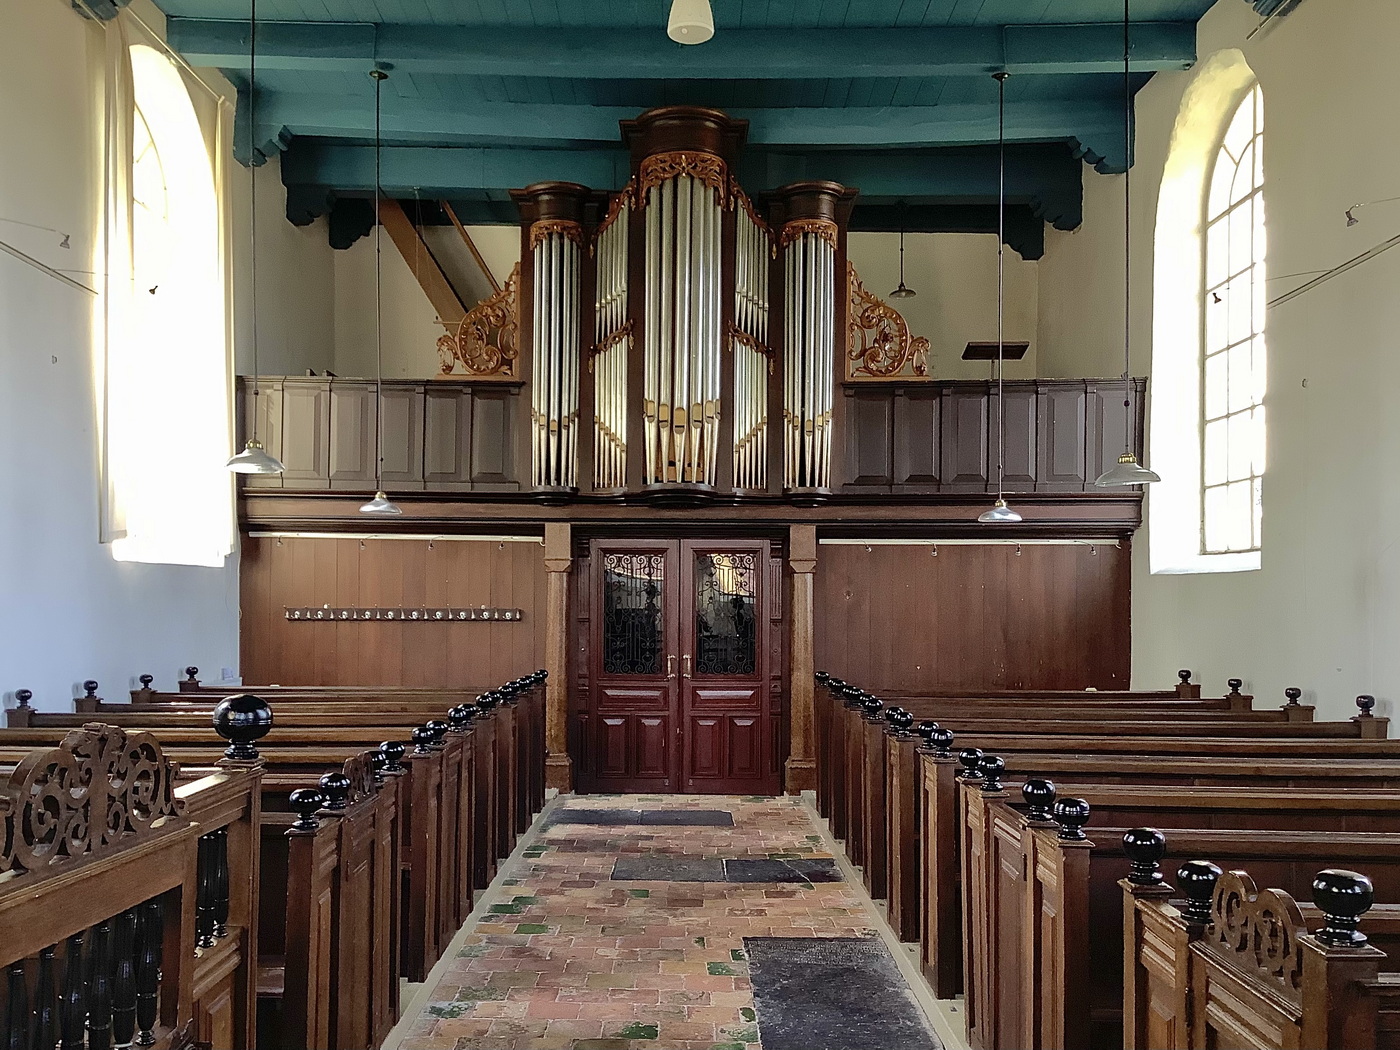 Interieur van de kerk met het orgel. Foto: (c)Jur Kuipers.